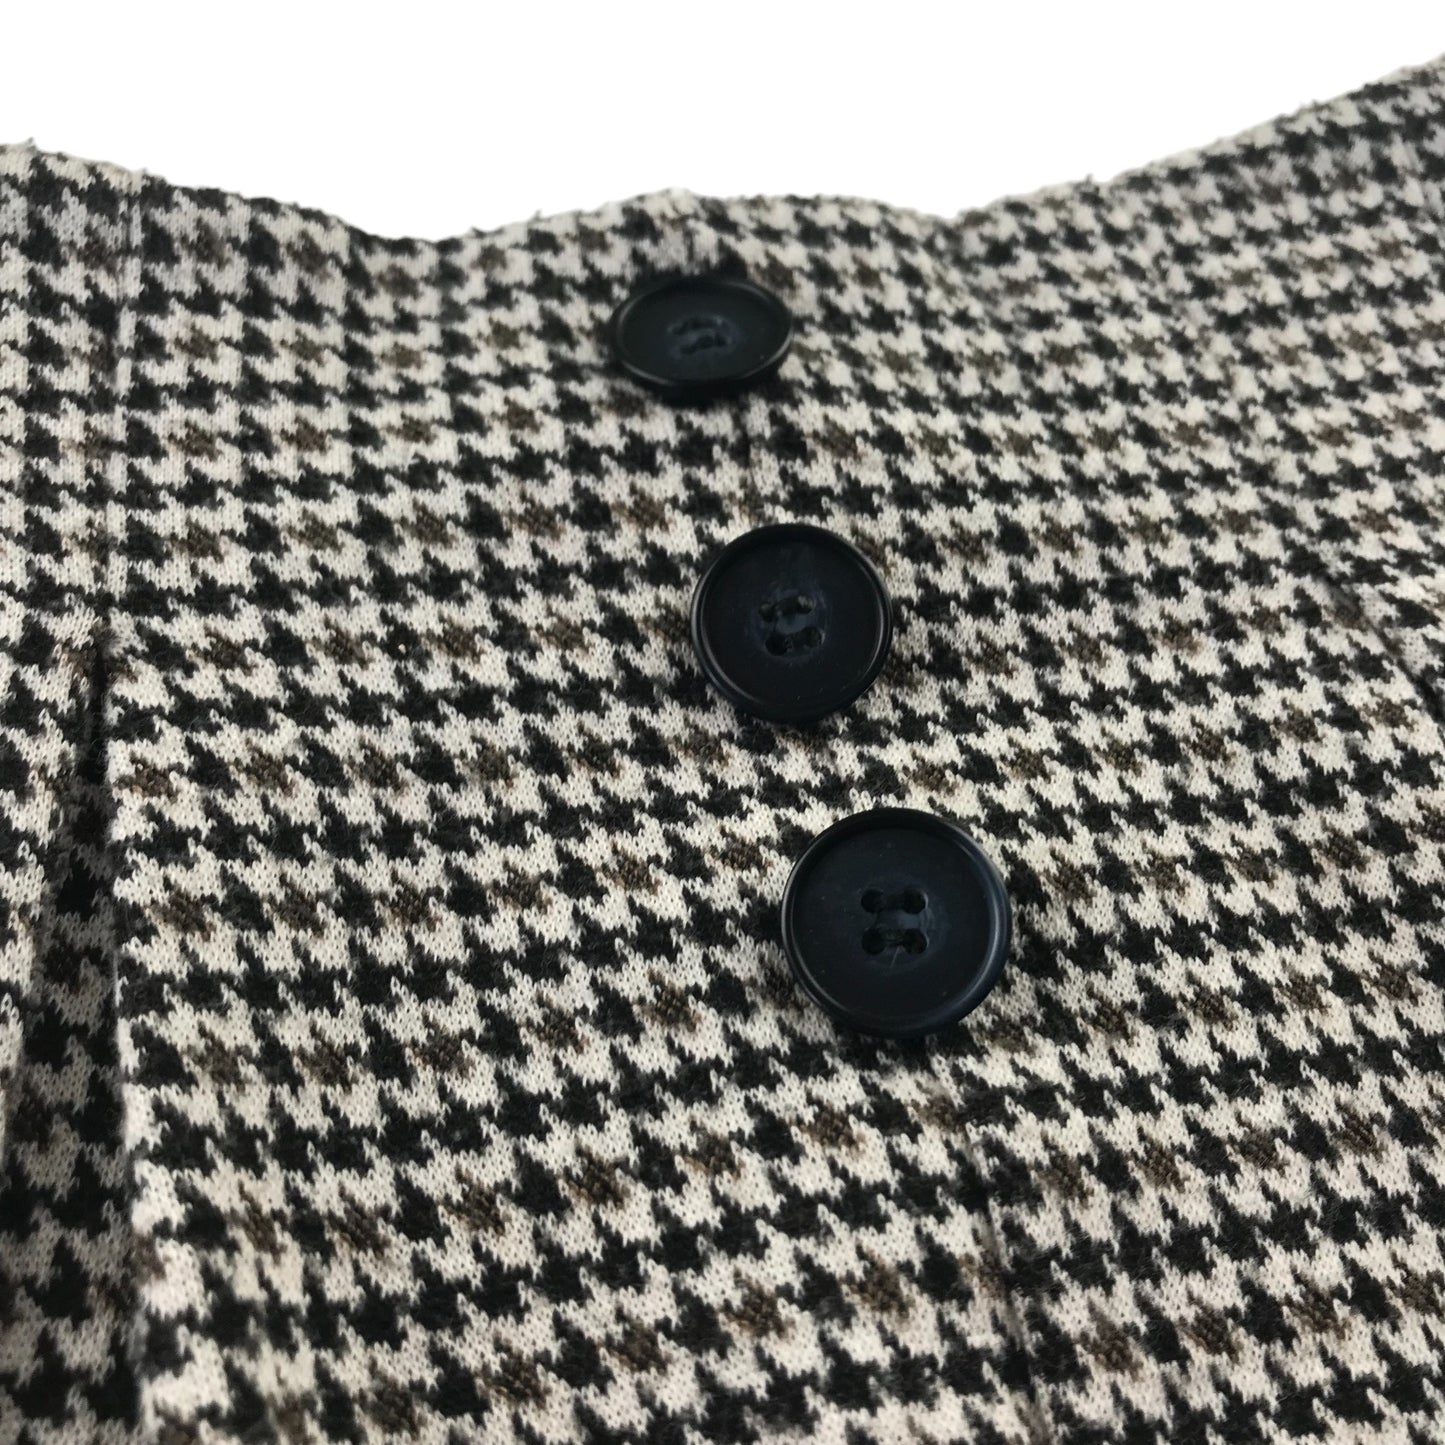 Zara skort 9 years black and white houndstooth knit pattern